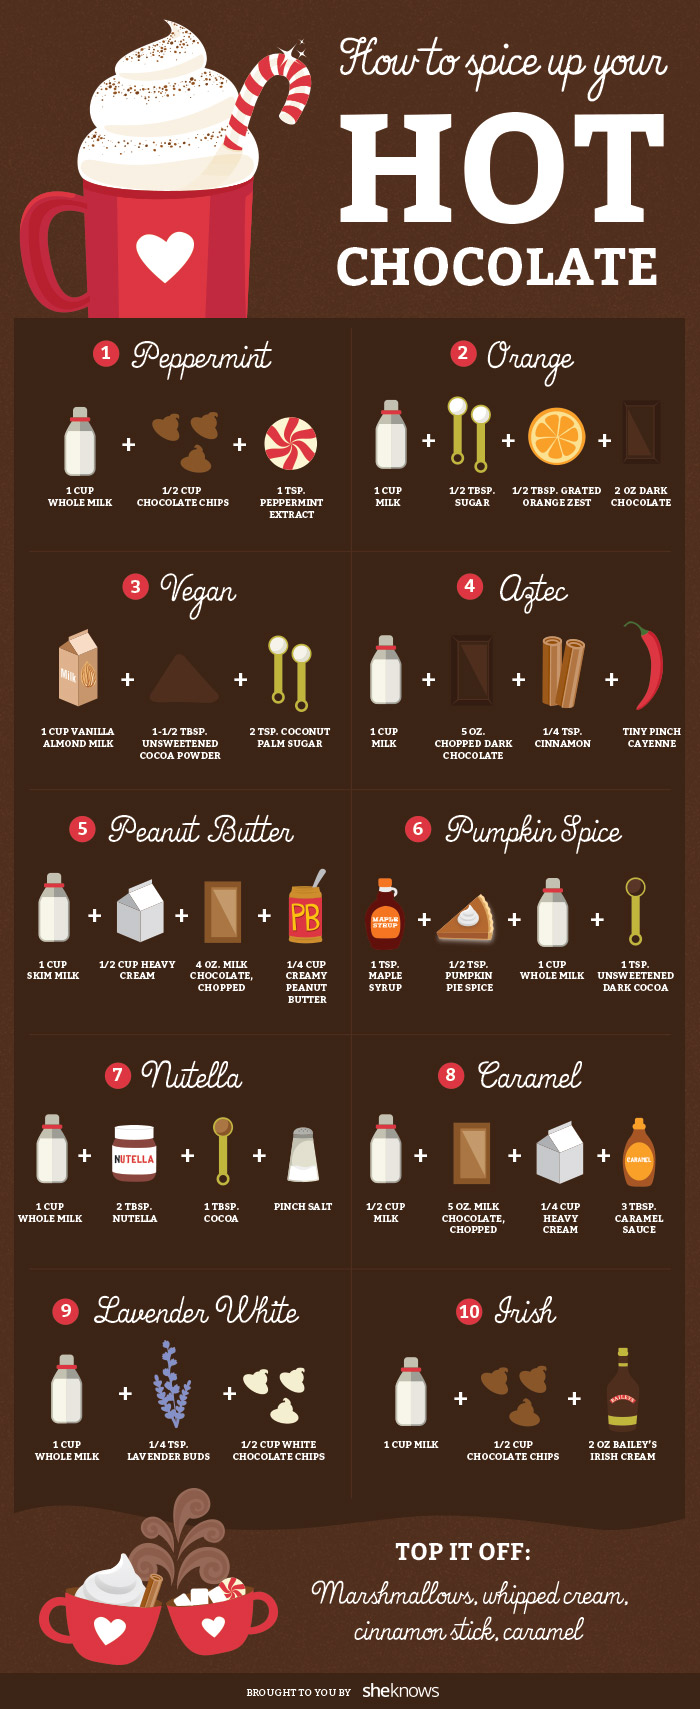 Fabulous Hot Chocolate Ideas!